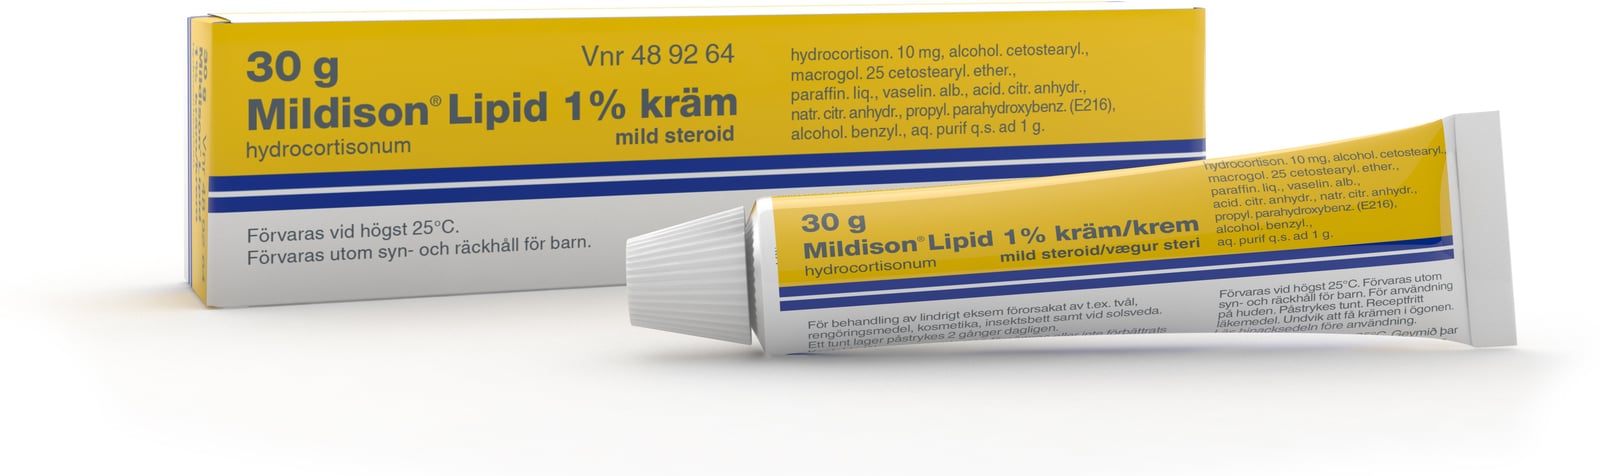 Mildison Lipid, kräm 1%, 30 gr